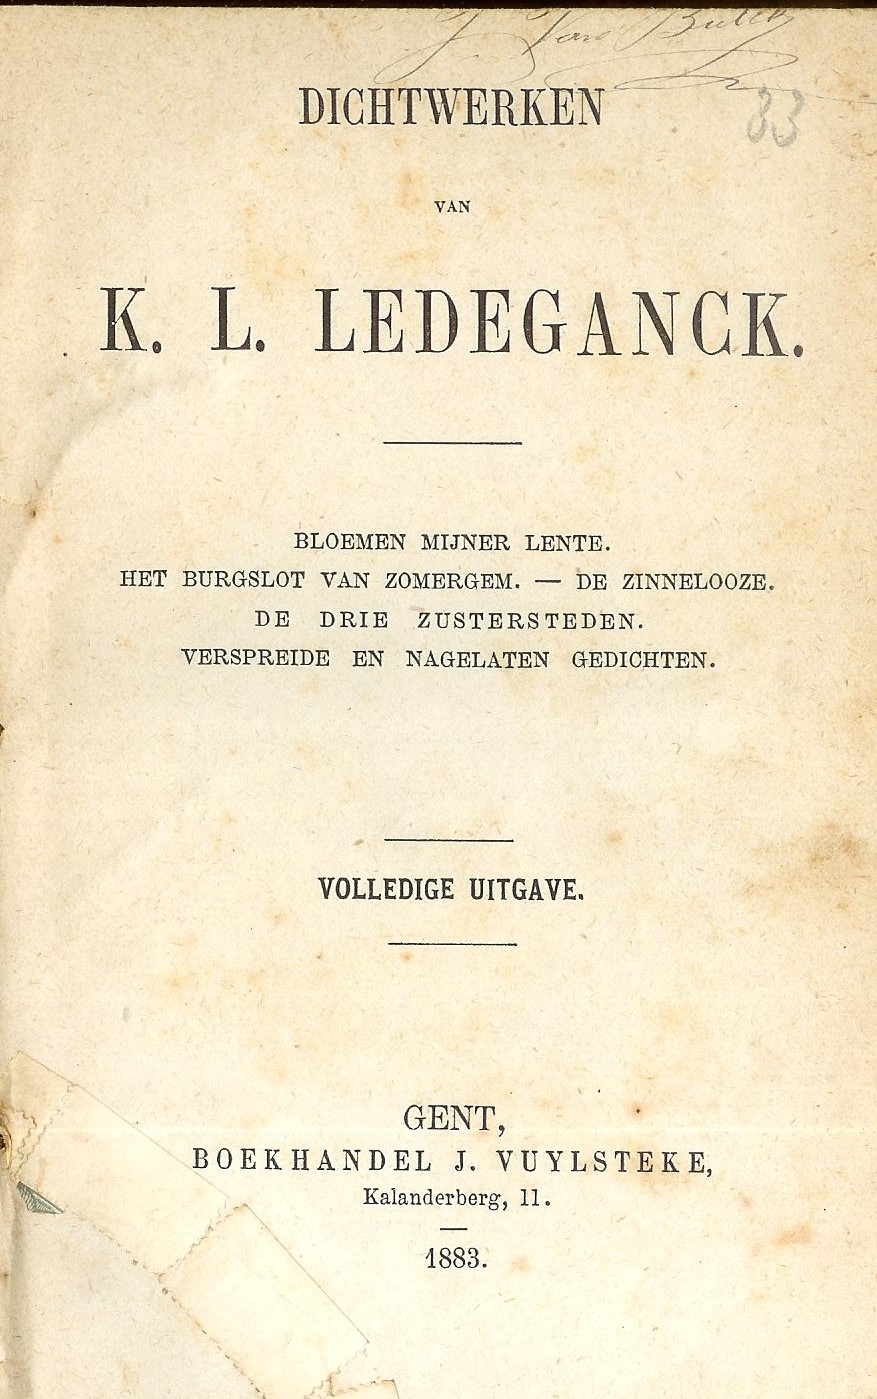 Ledeganck